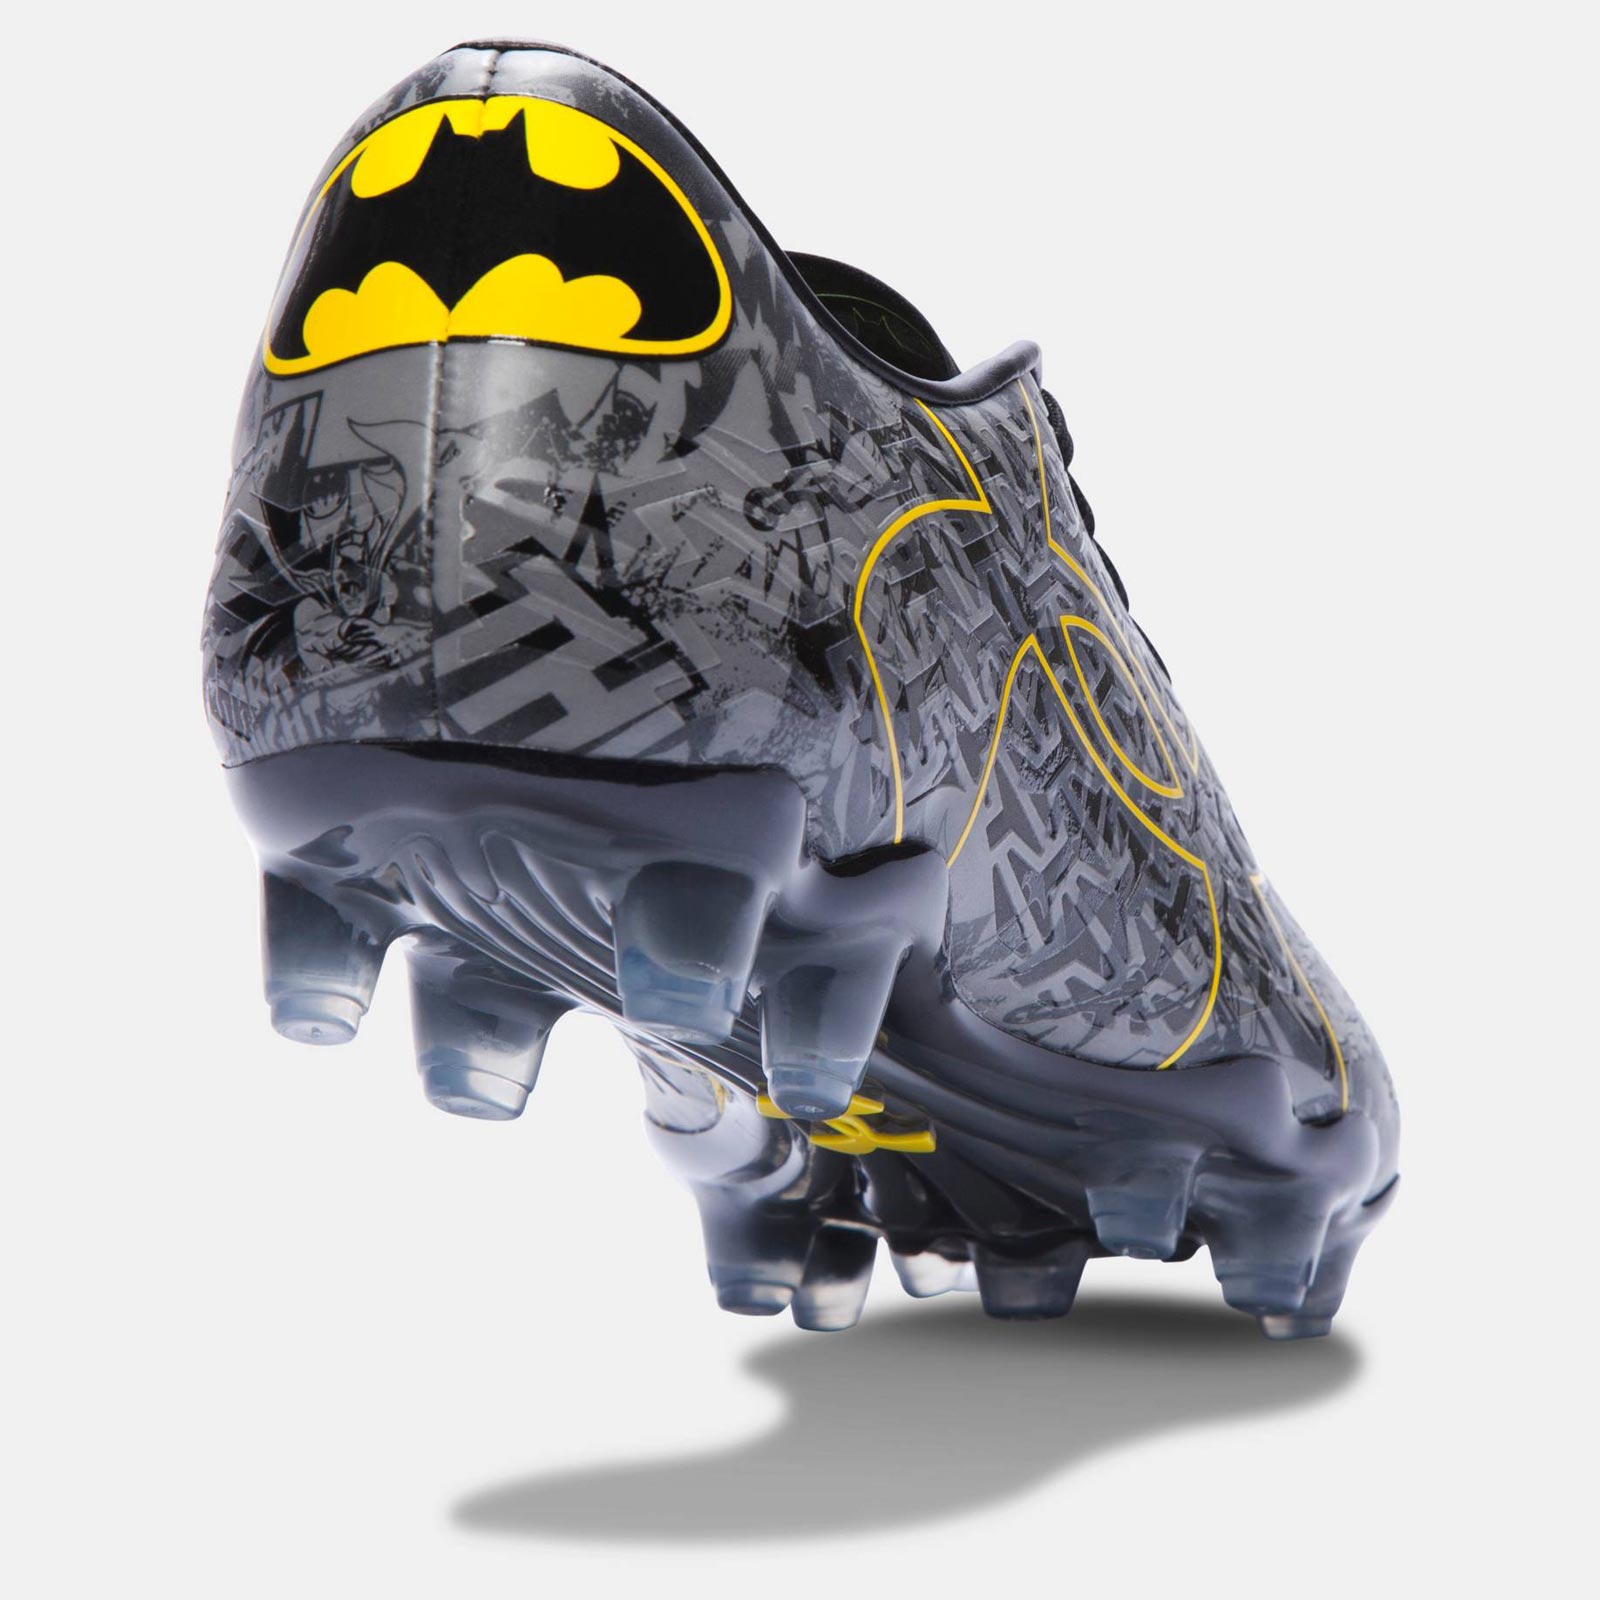 Under Armour Release Insane Looking Batman Vs Superman Boots - SPORTbible